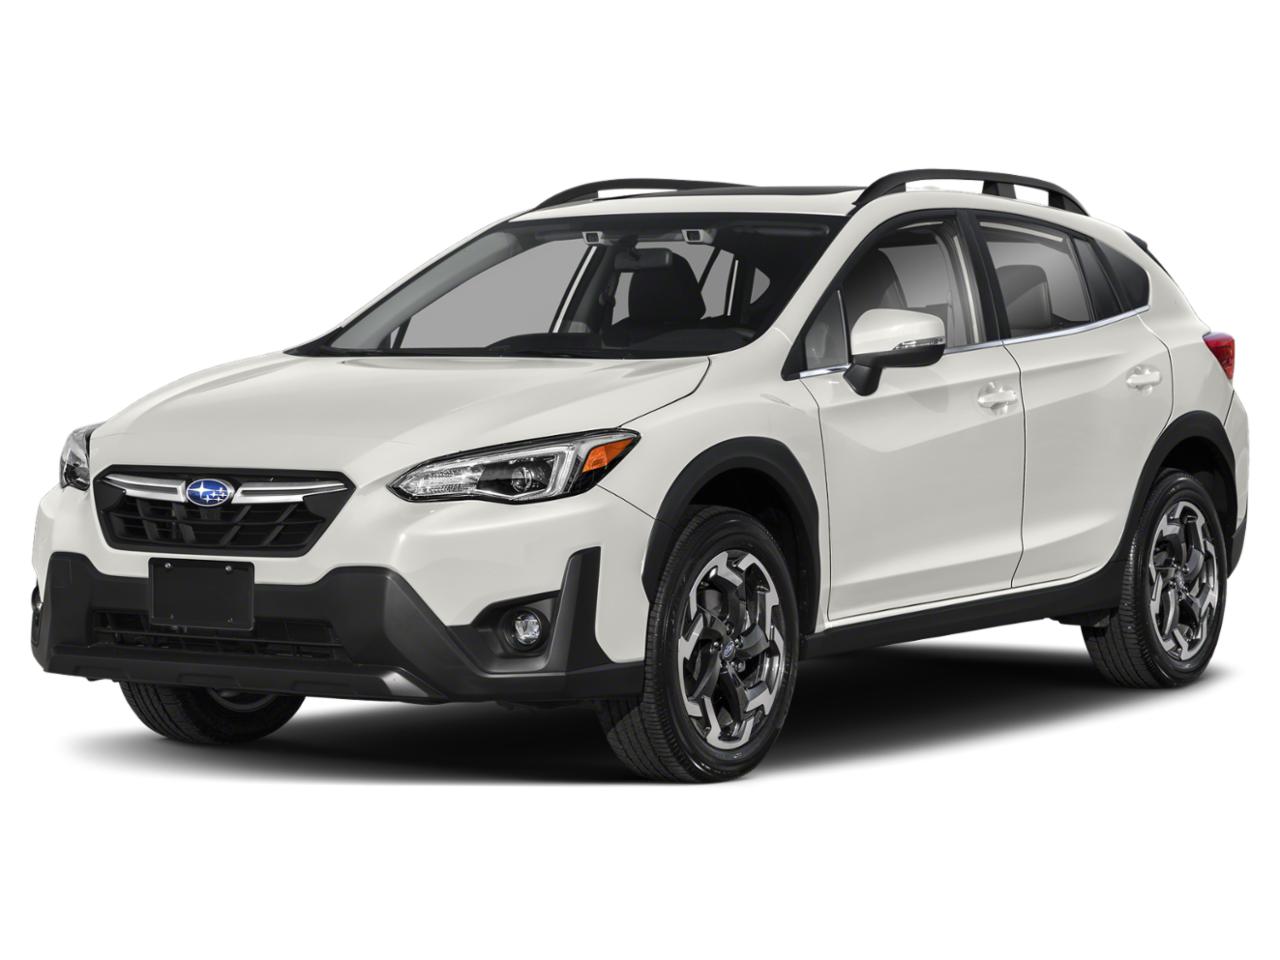 Search New Subaru Crosstrek Models For Sale In Dallas Fort Worth Houston Austin San Antonio